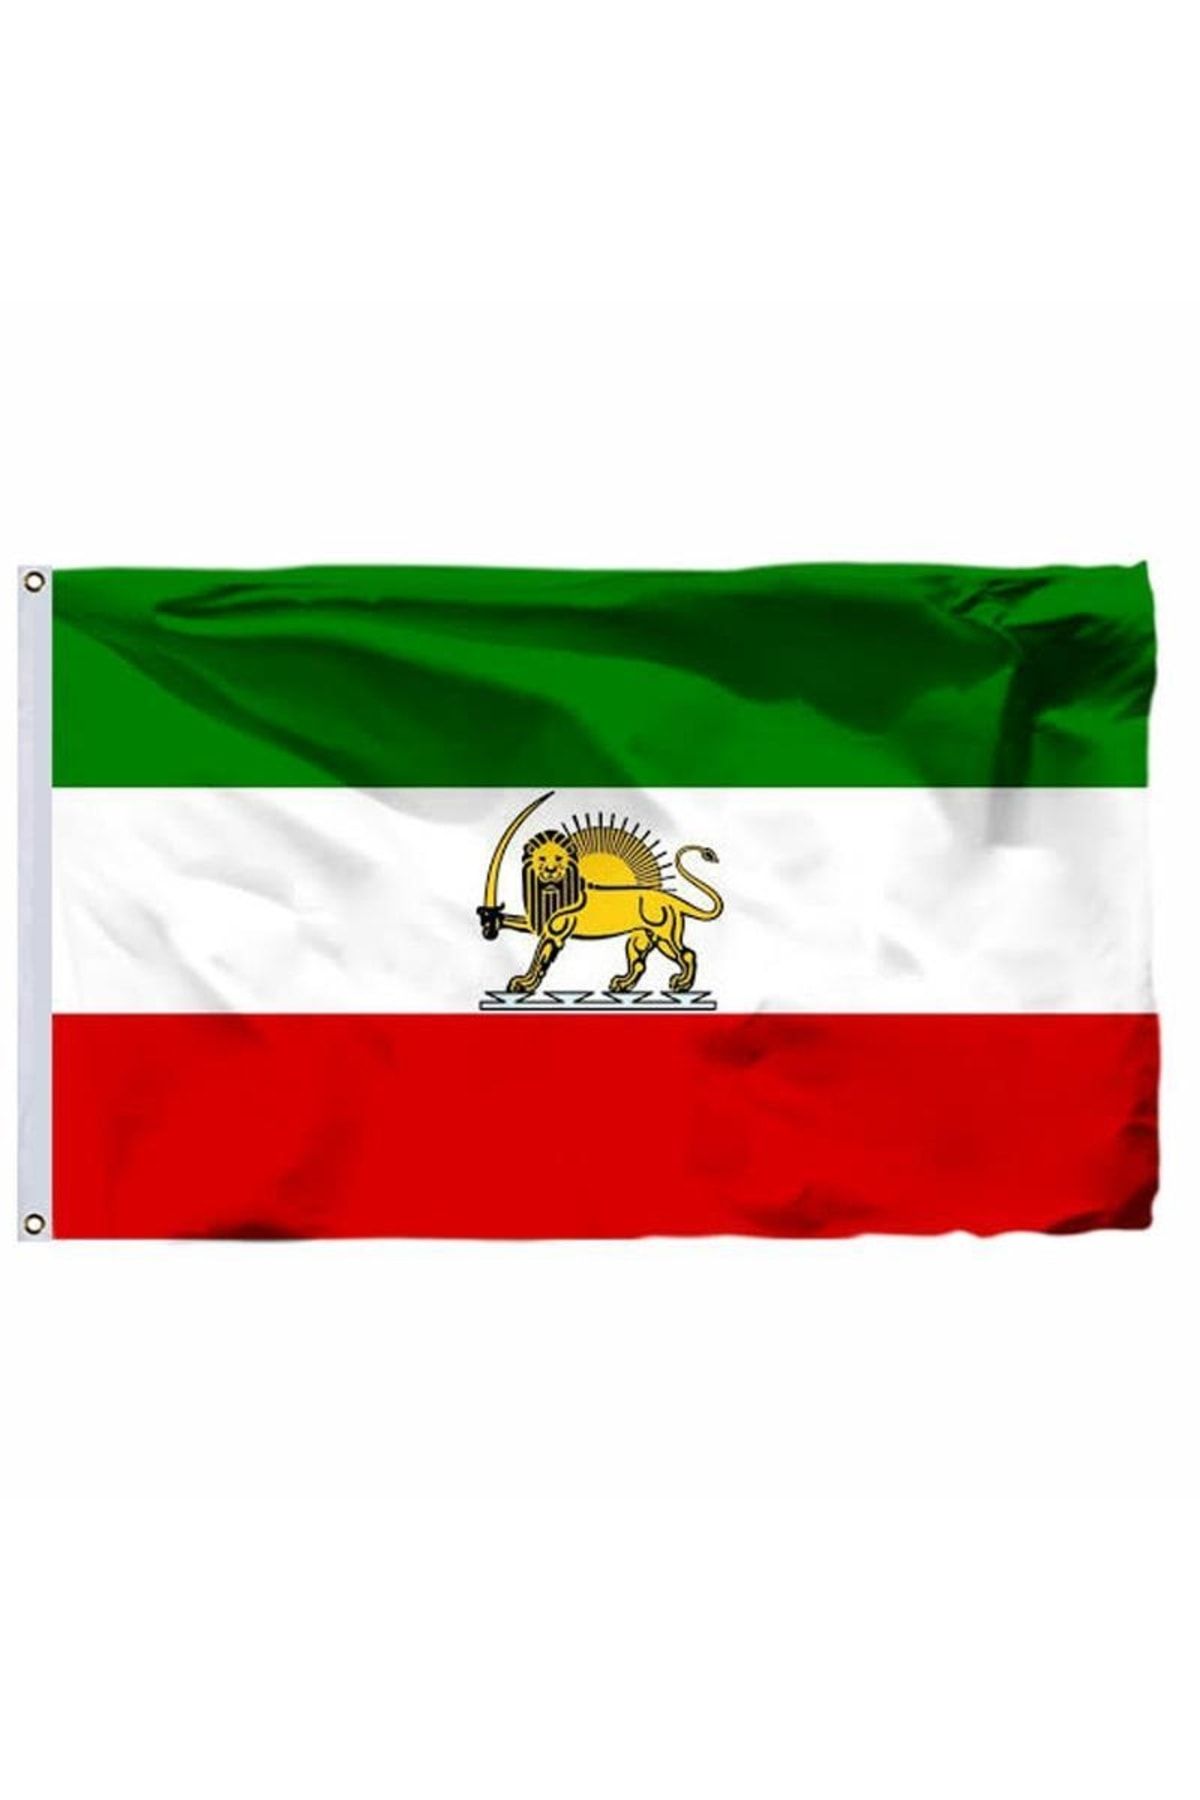 ZC Bayrak Aslan Güneş Iran Milli Gönder Bayrağı Raşel Kumaş Dijital Baskı 70x105